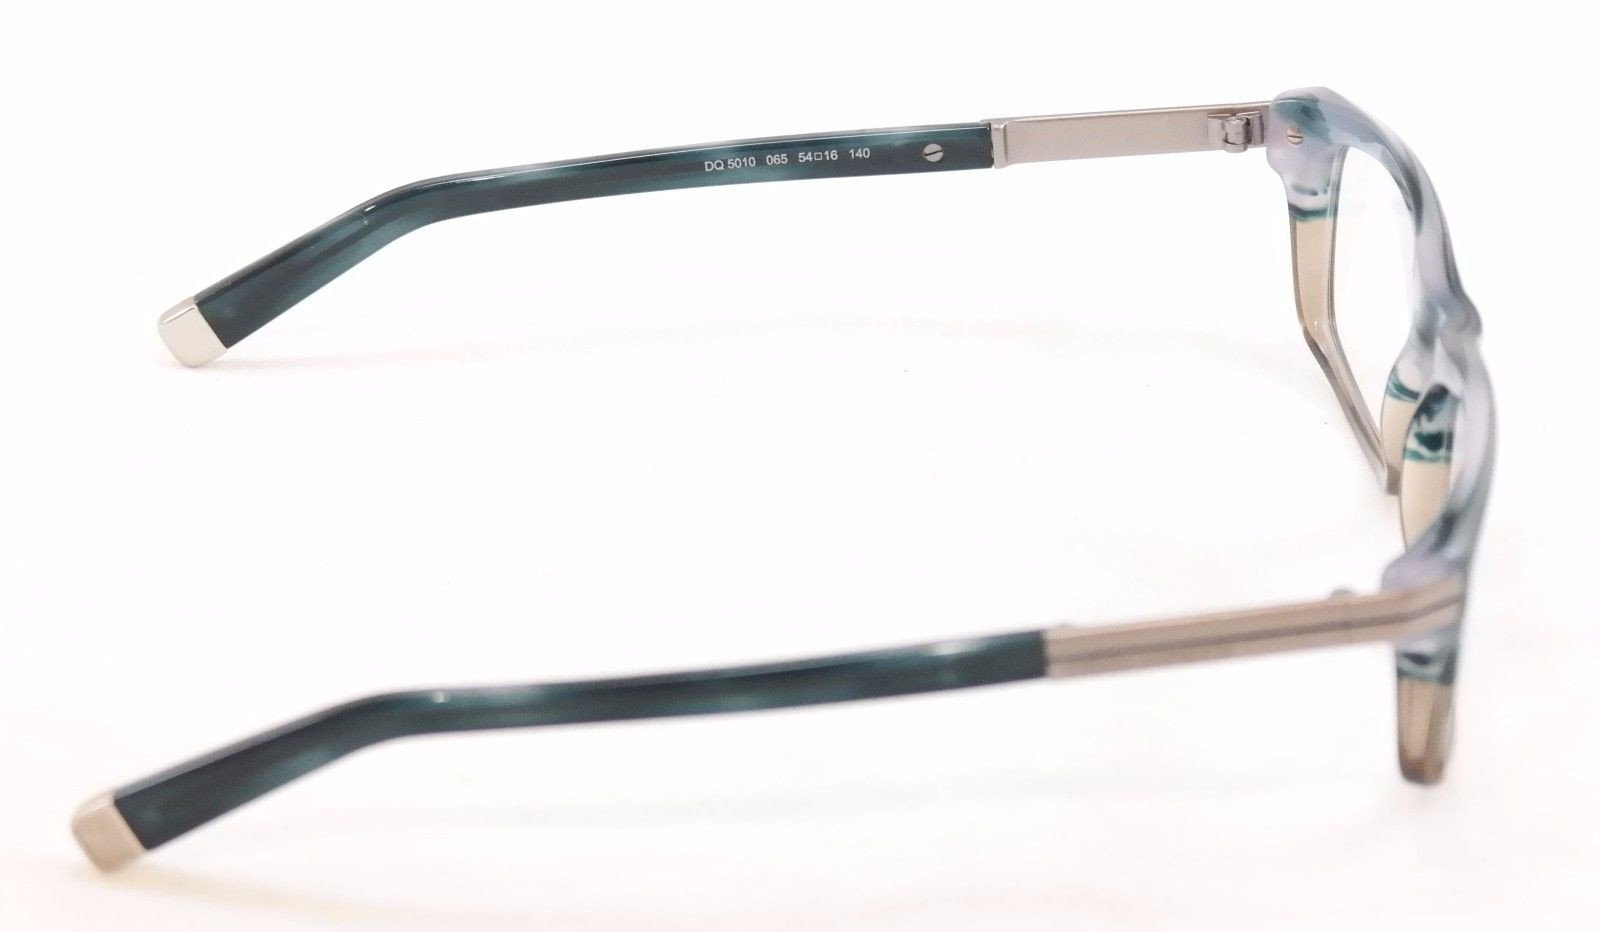 Dsquared2 Eyeglasses Frame DQ5010 065 Blue Marble Grey Plastic Italy 54-16-140 - Frame Bay